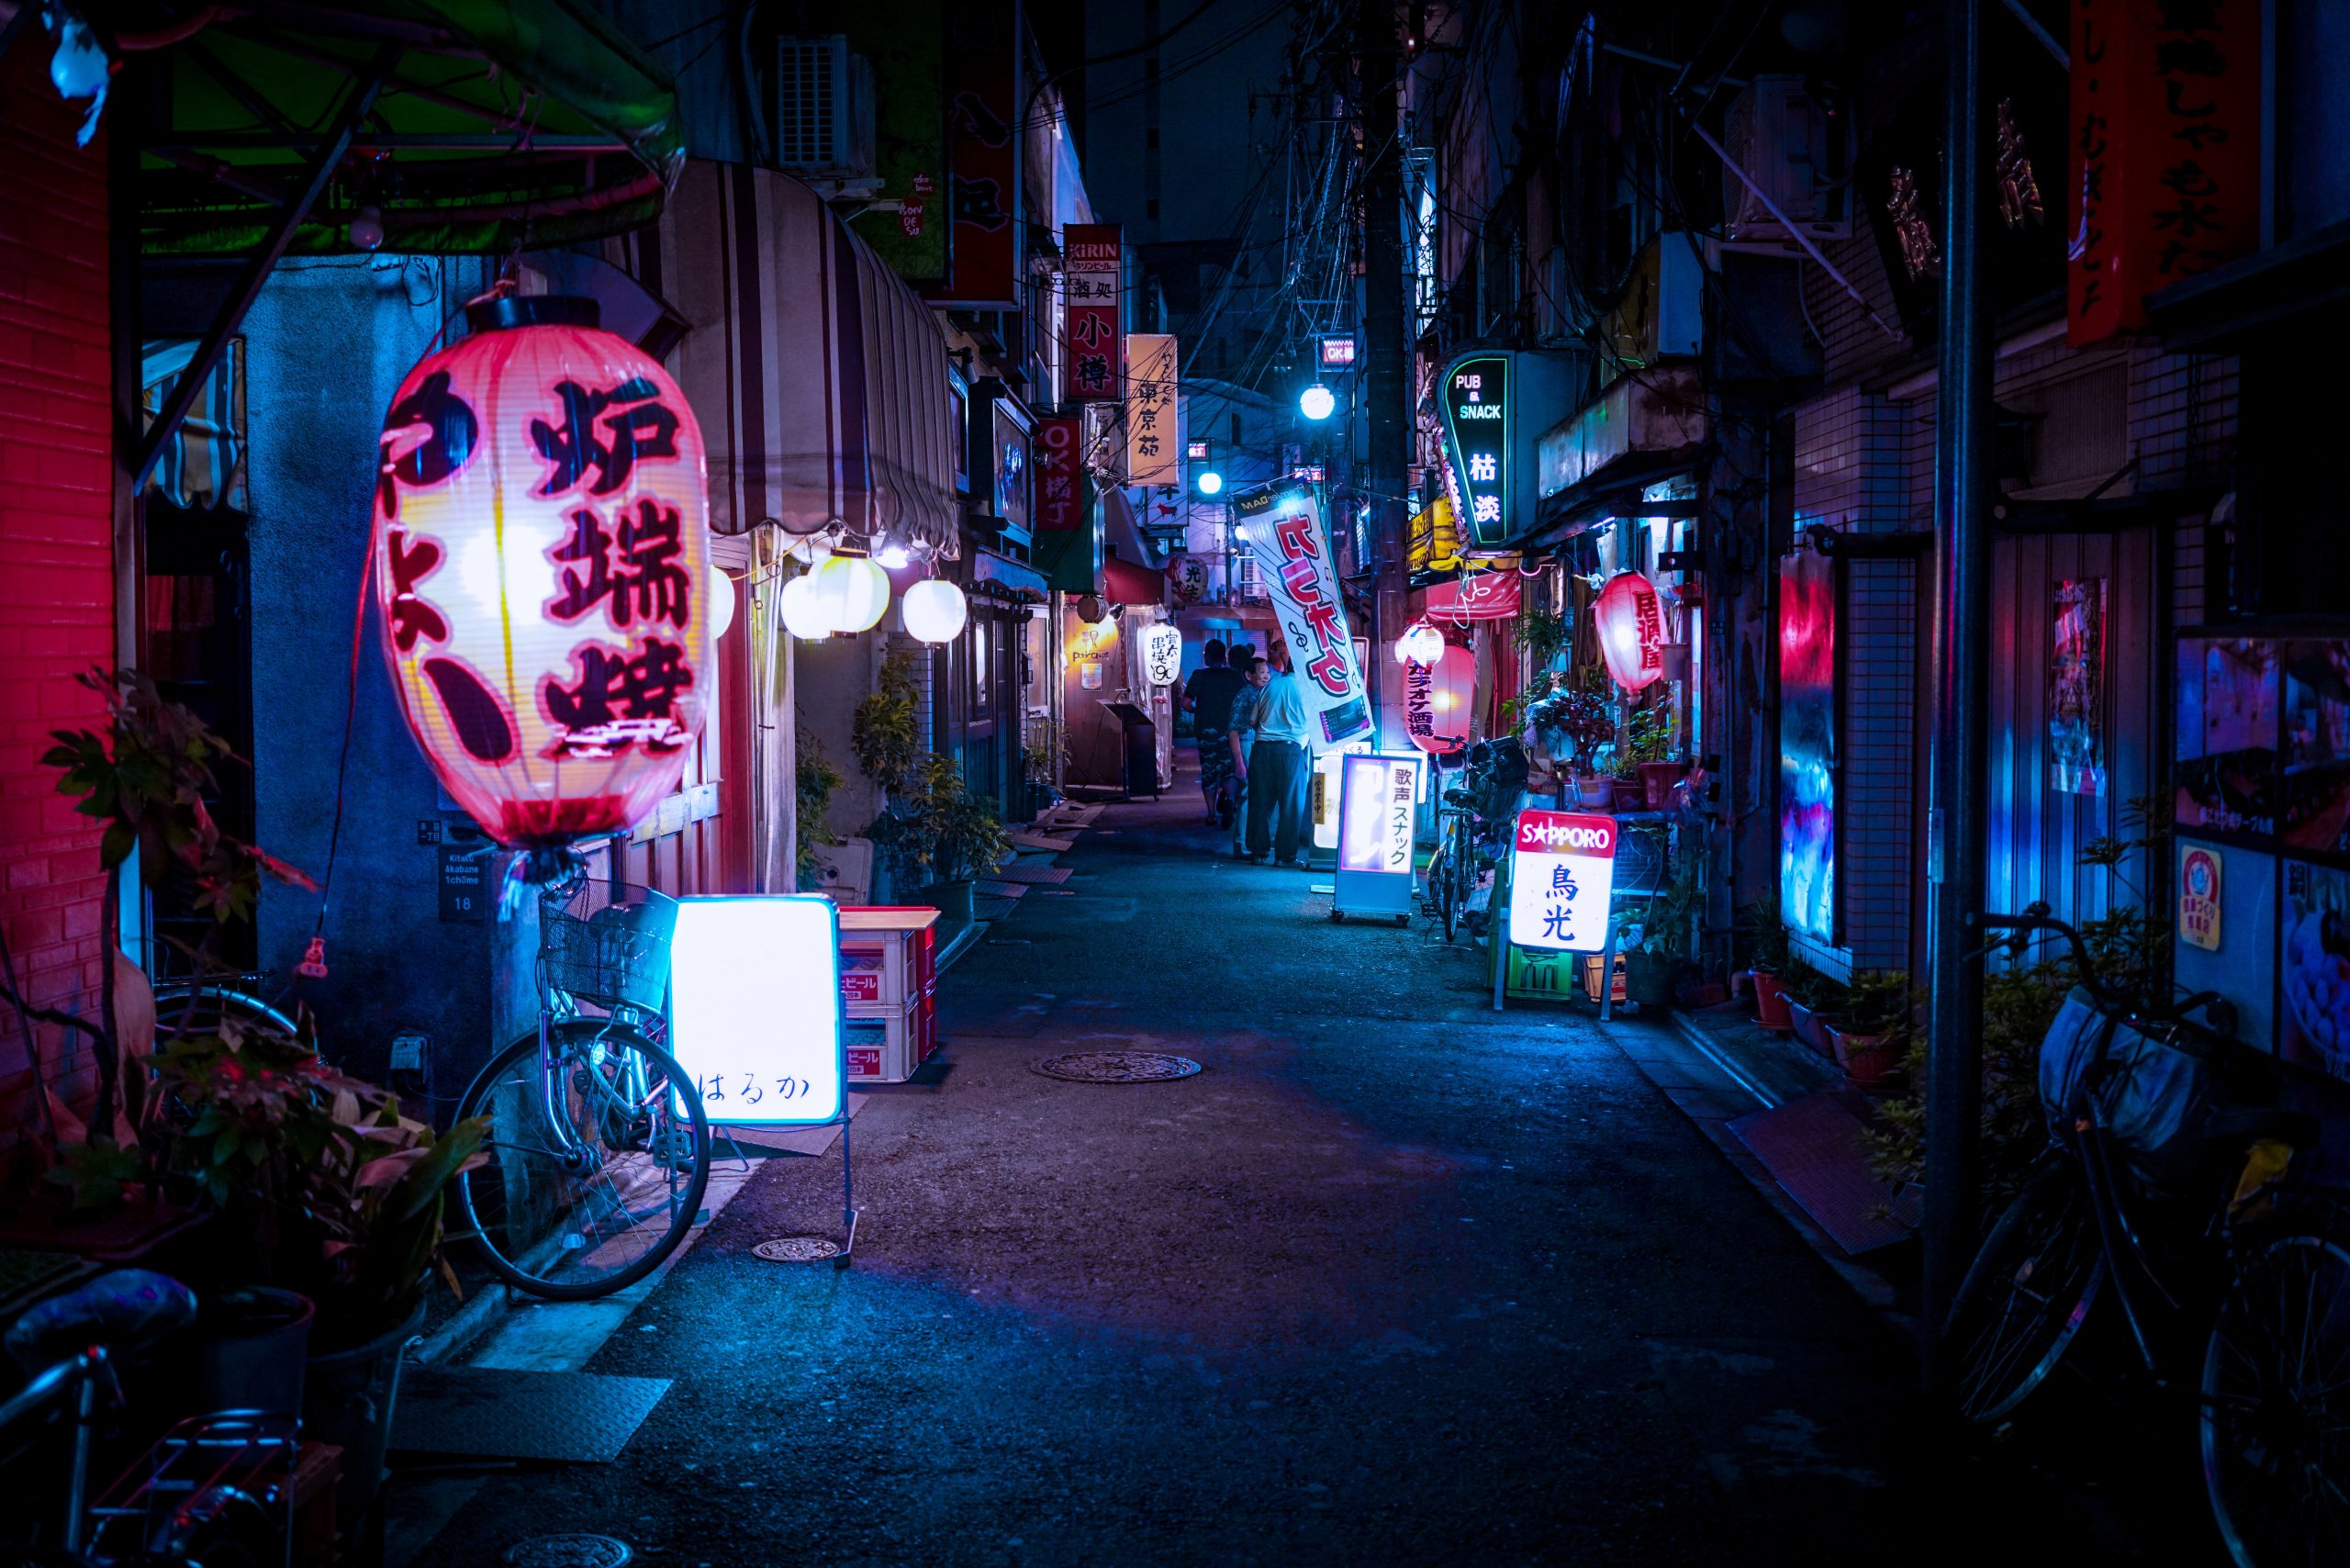 Backstreets of Kita neighbourhood in Osaka